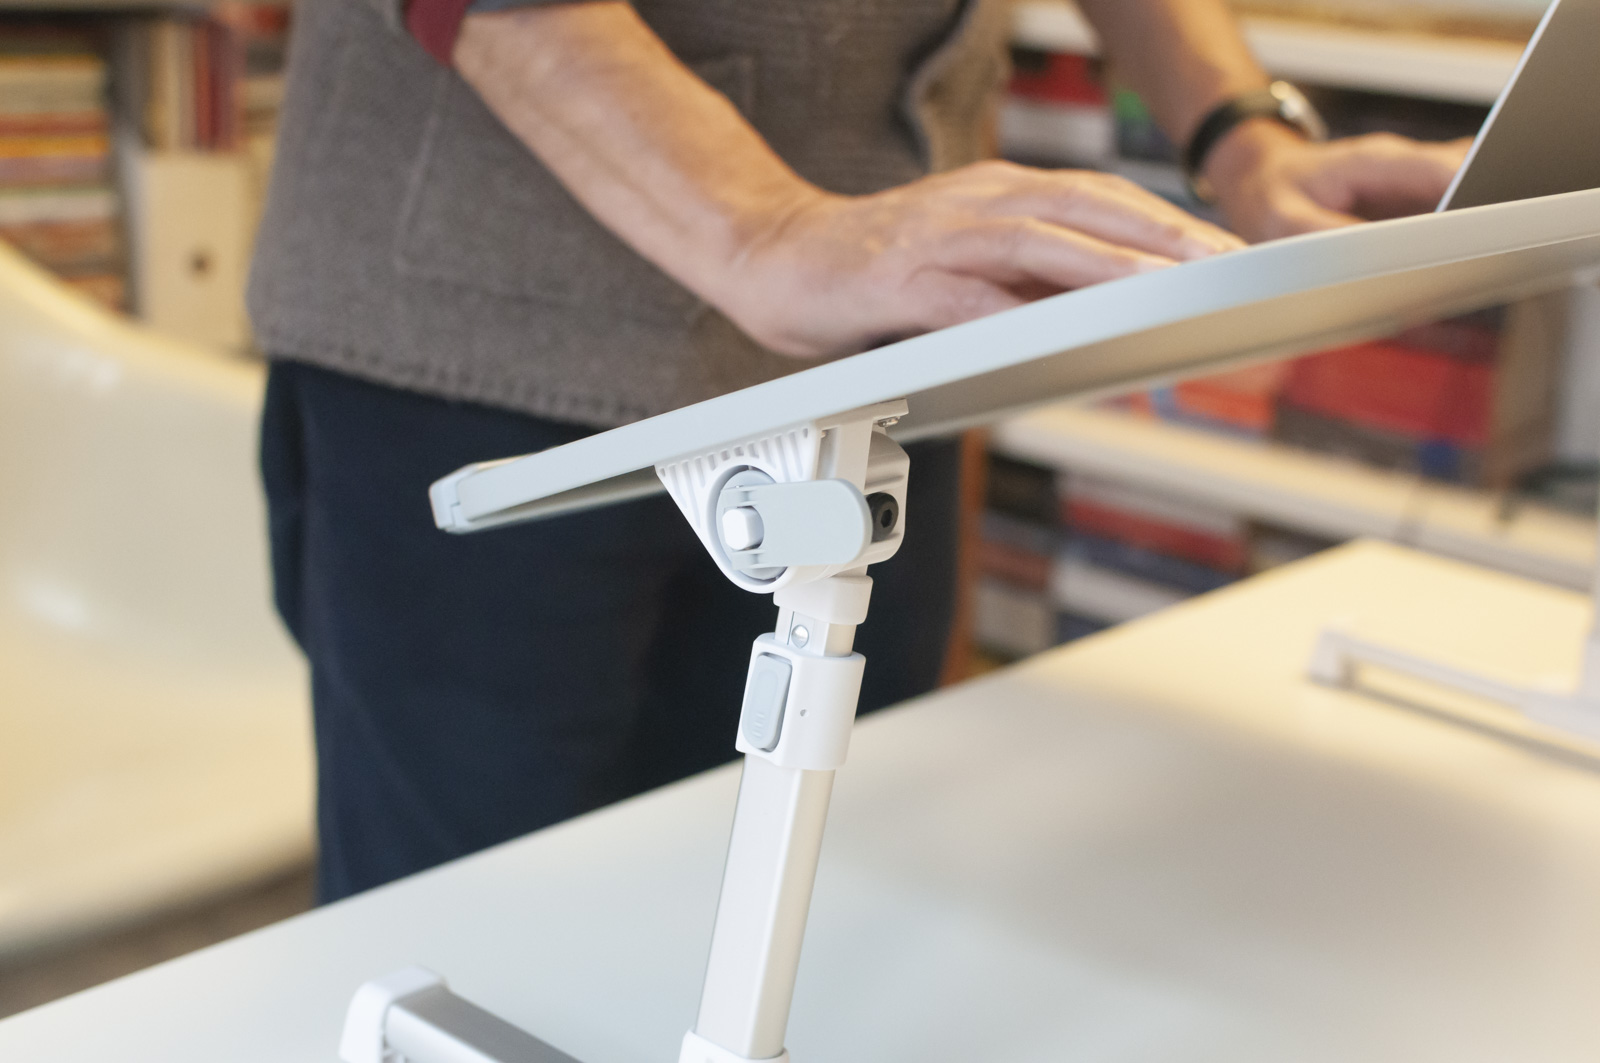 Recensione Taotronics Laptop Standing Desk, smart working comodo e intelligente